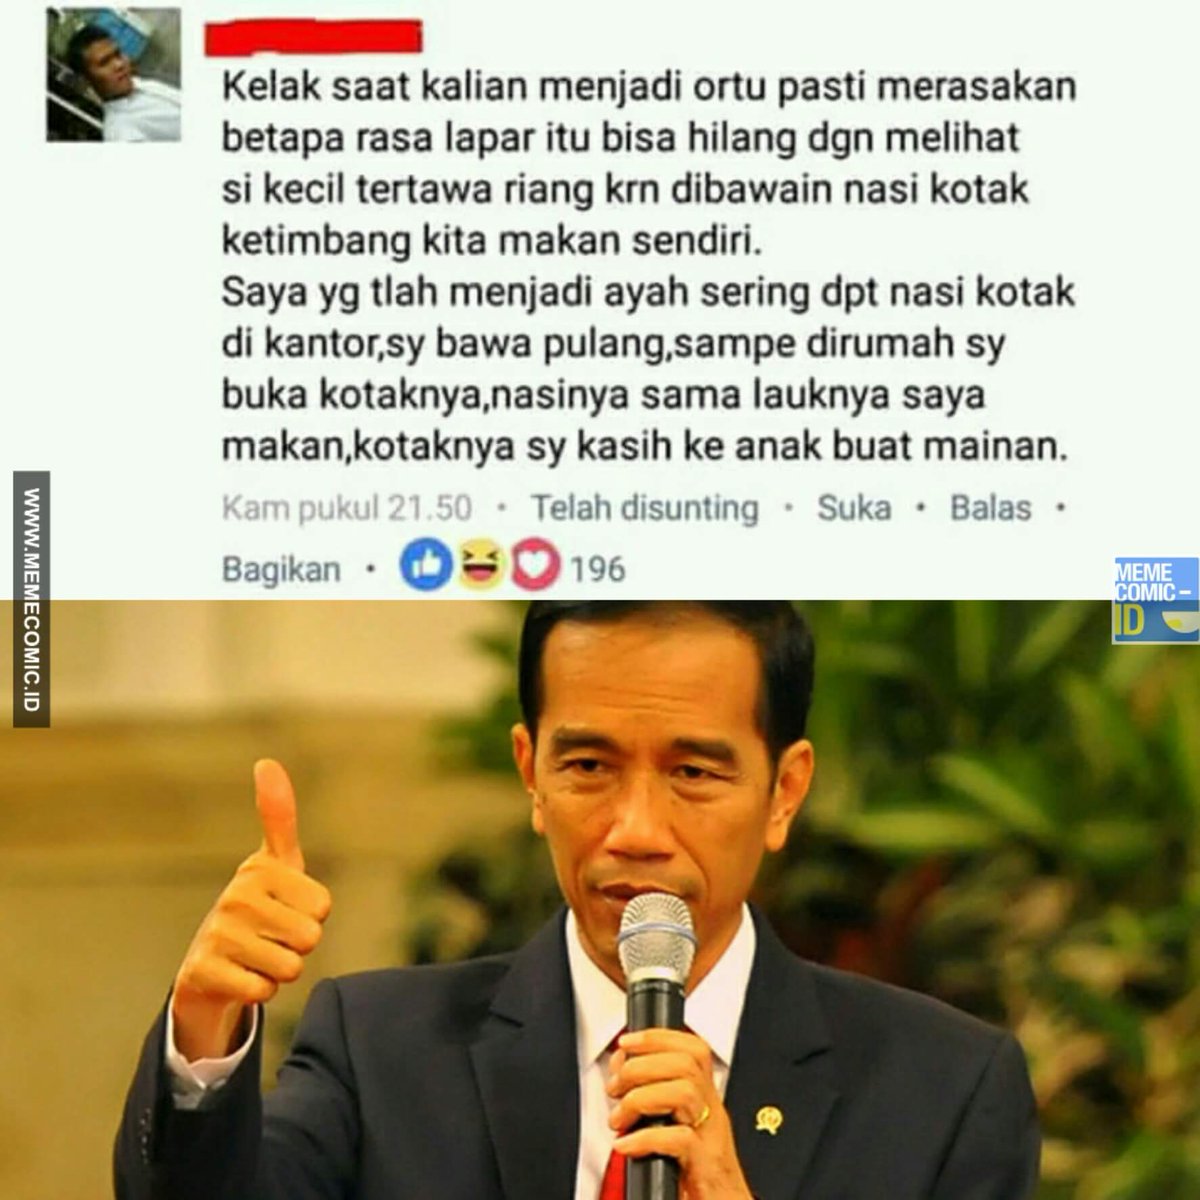 Meme Comic Indonesia On Twitter Ayah Yg Baik